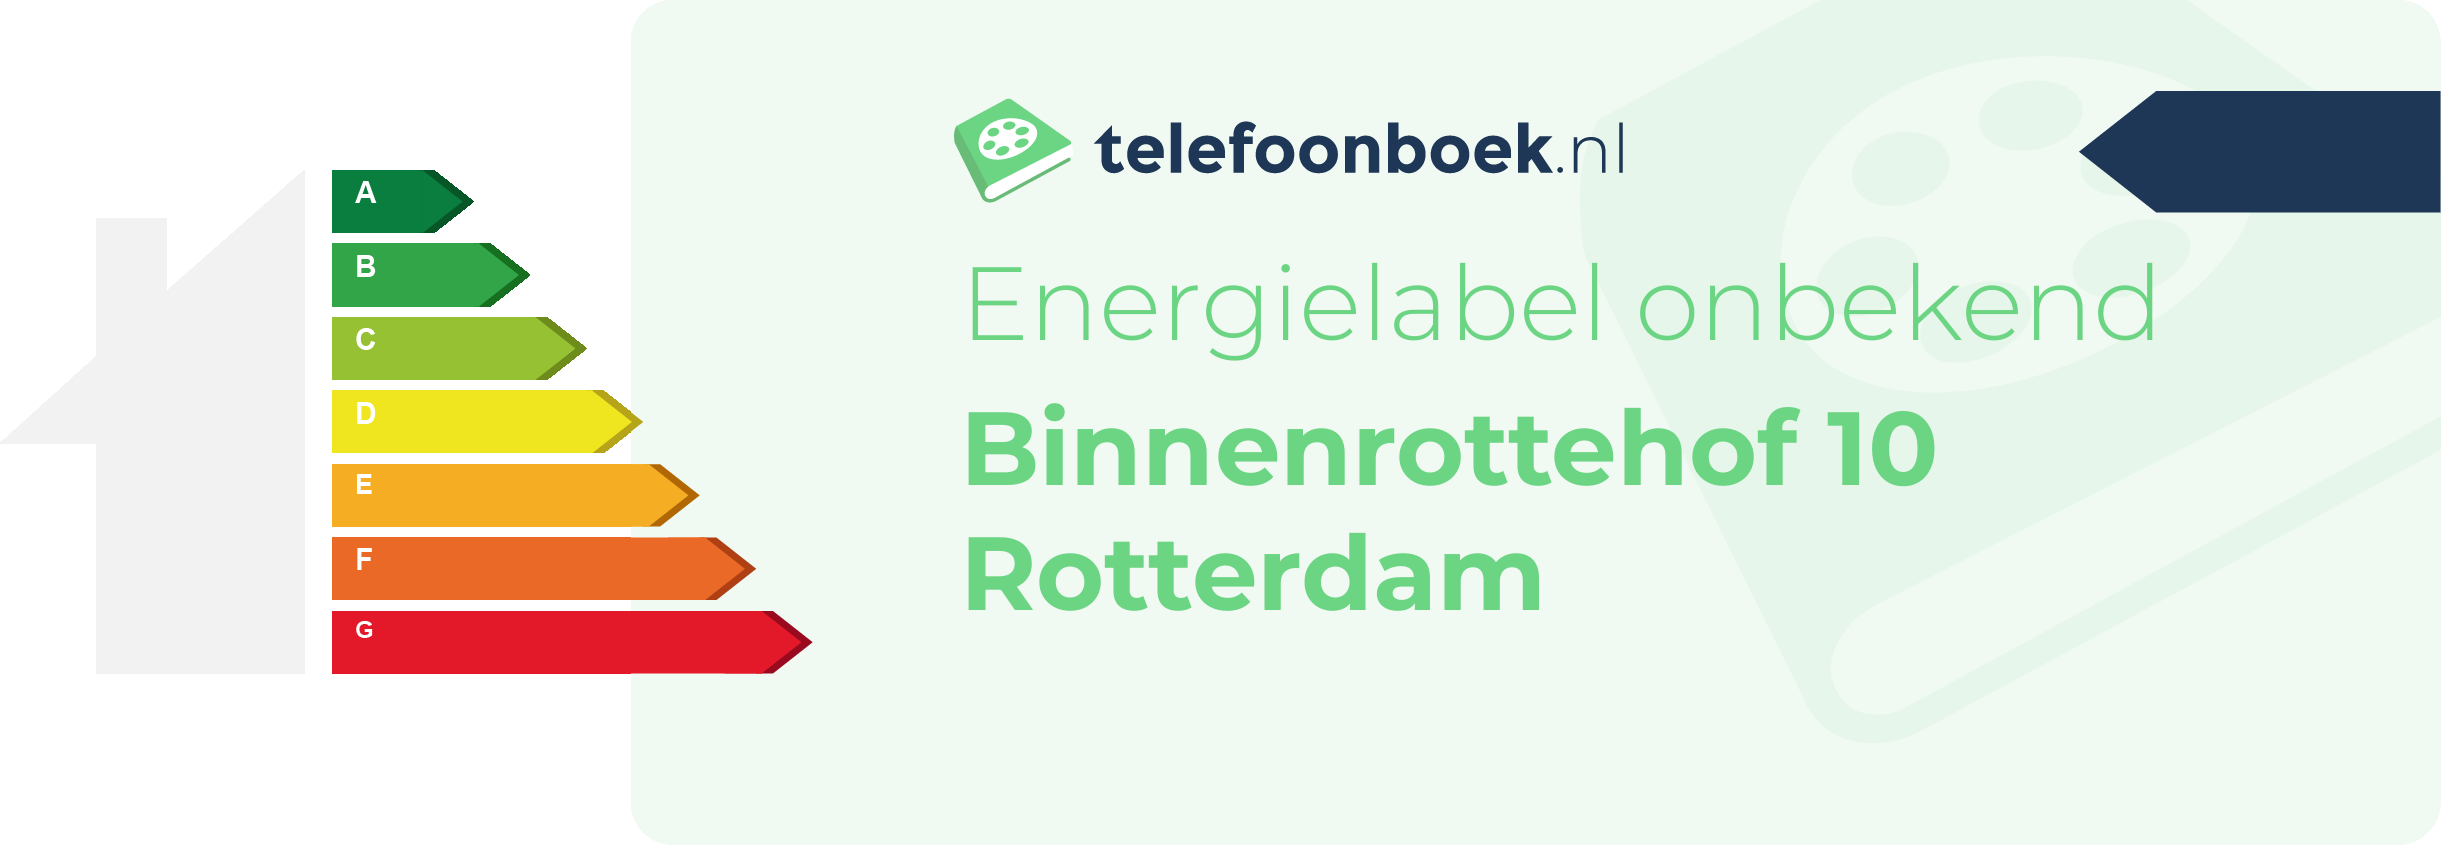 Energielabel Binnenrottehof 10 Rotterdam